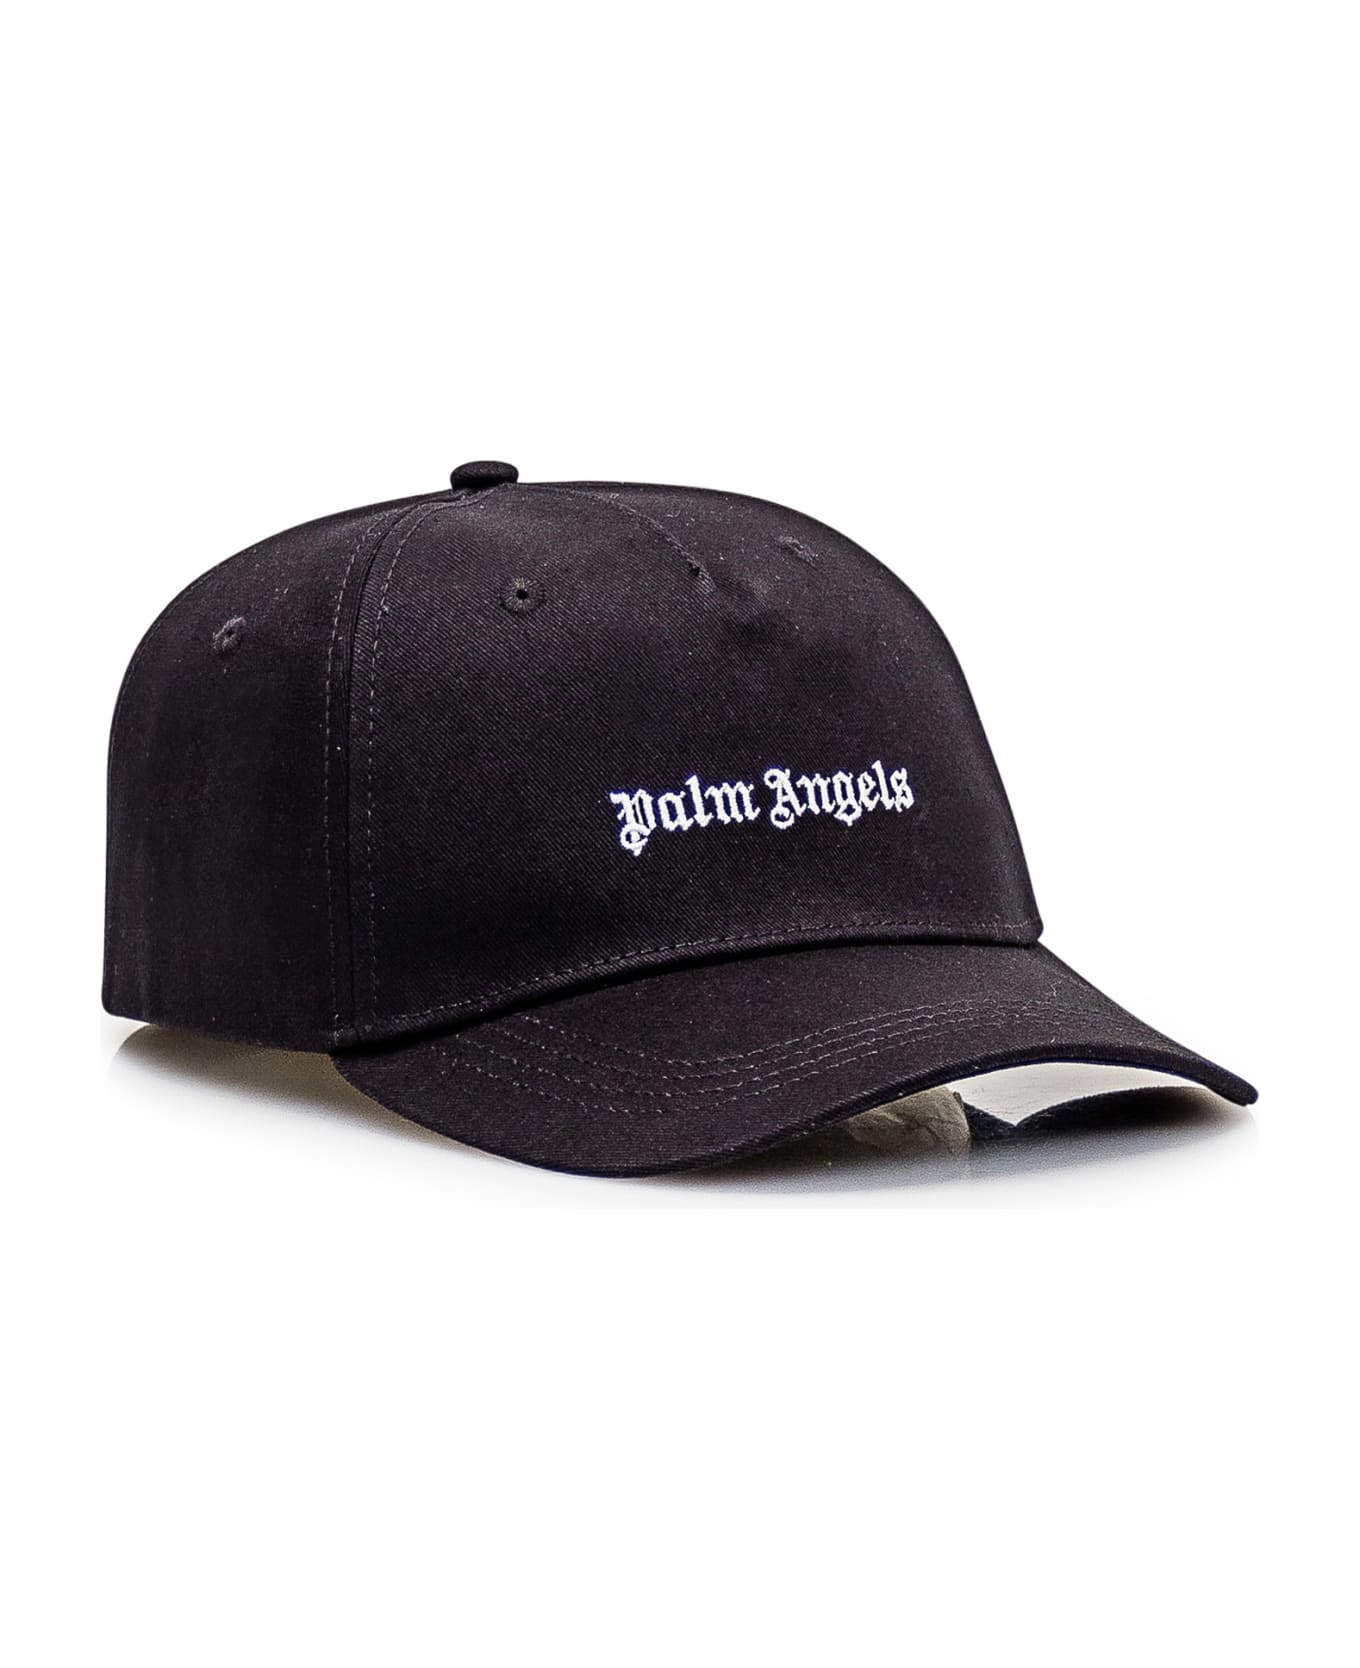 Palm Angels Logo Cap - Black off white